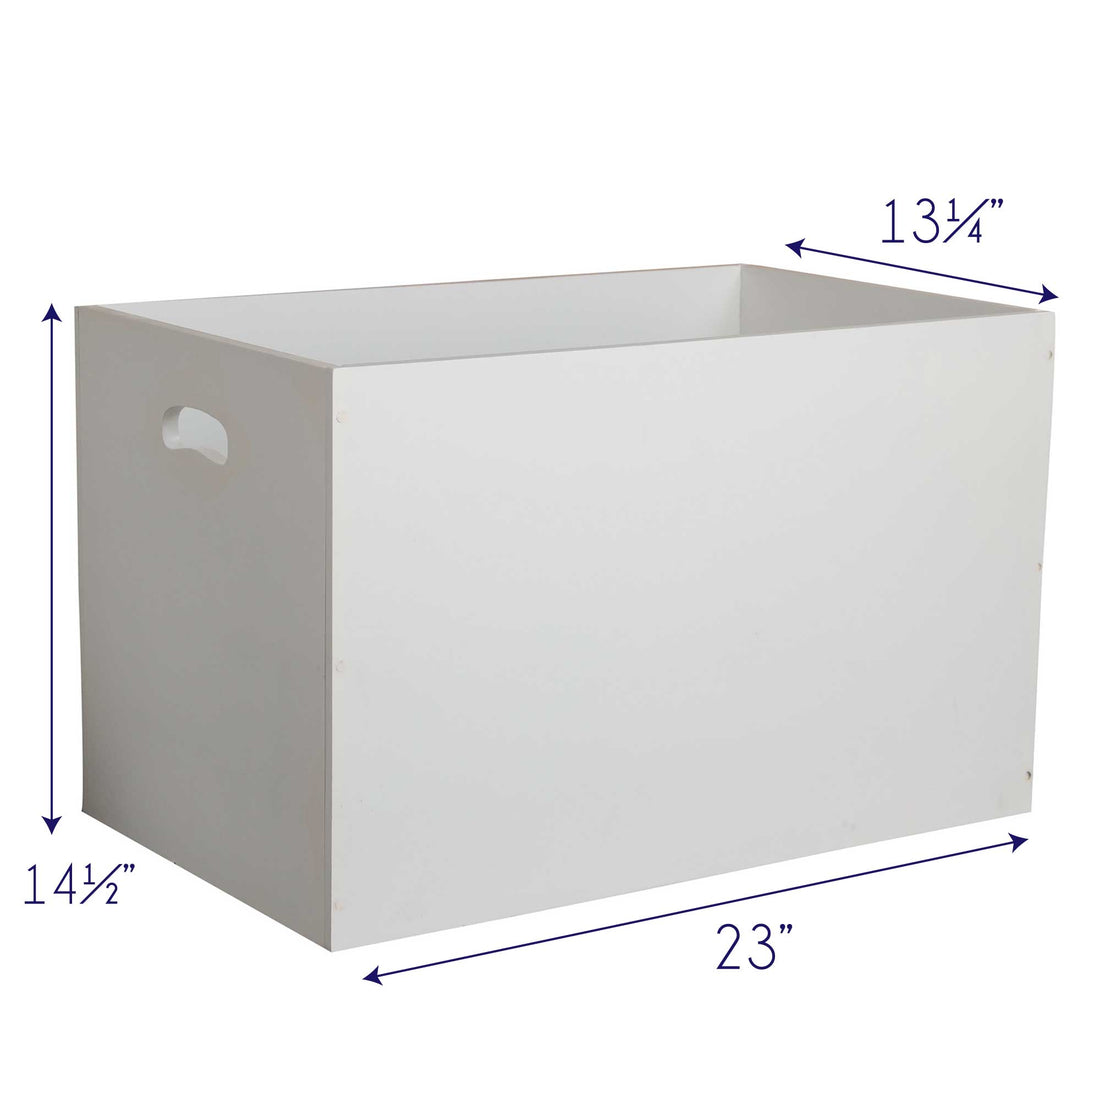 Open White Toy Box Bench with Aqua Circle ll design